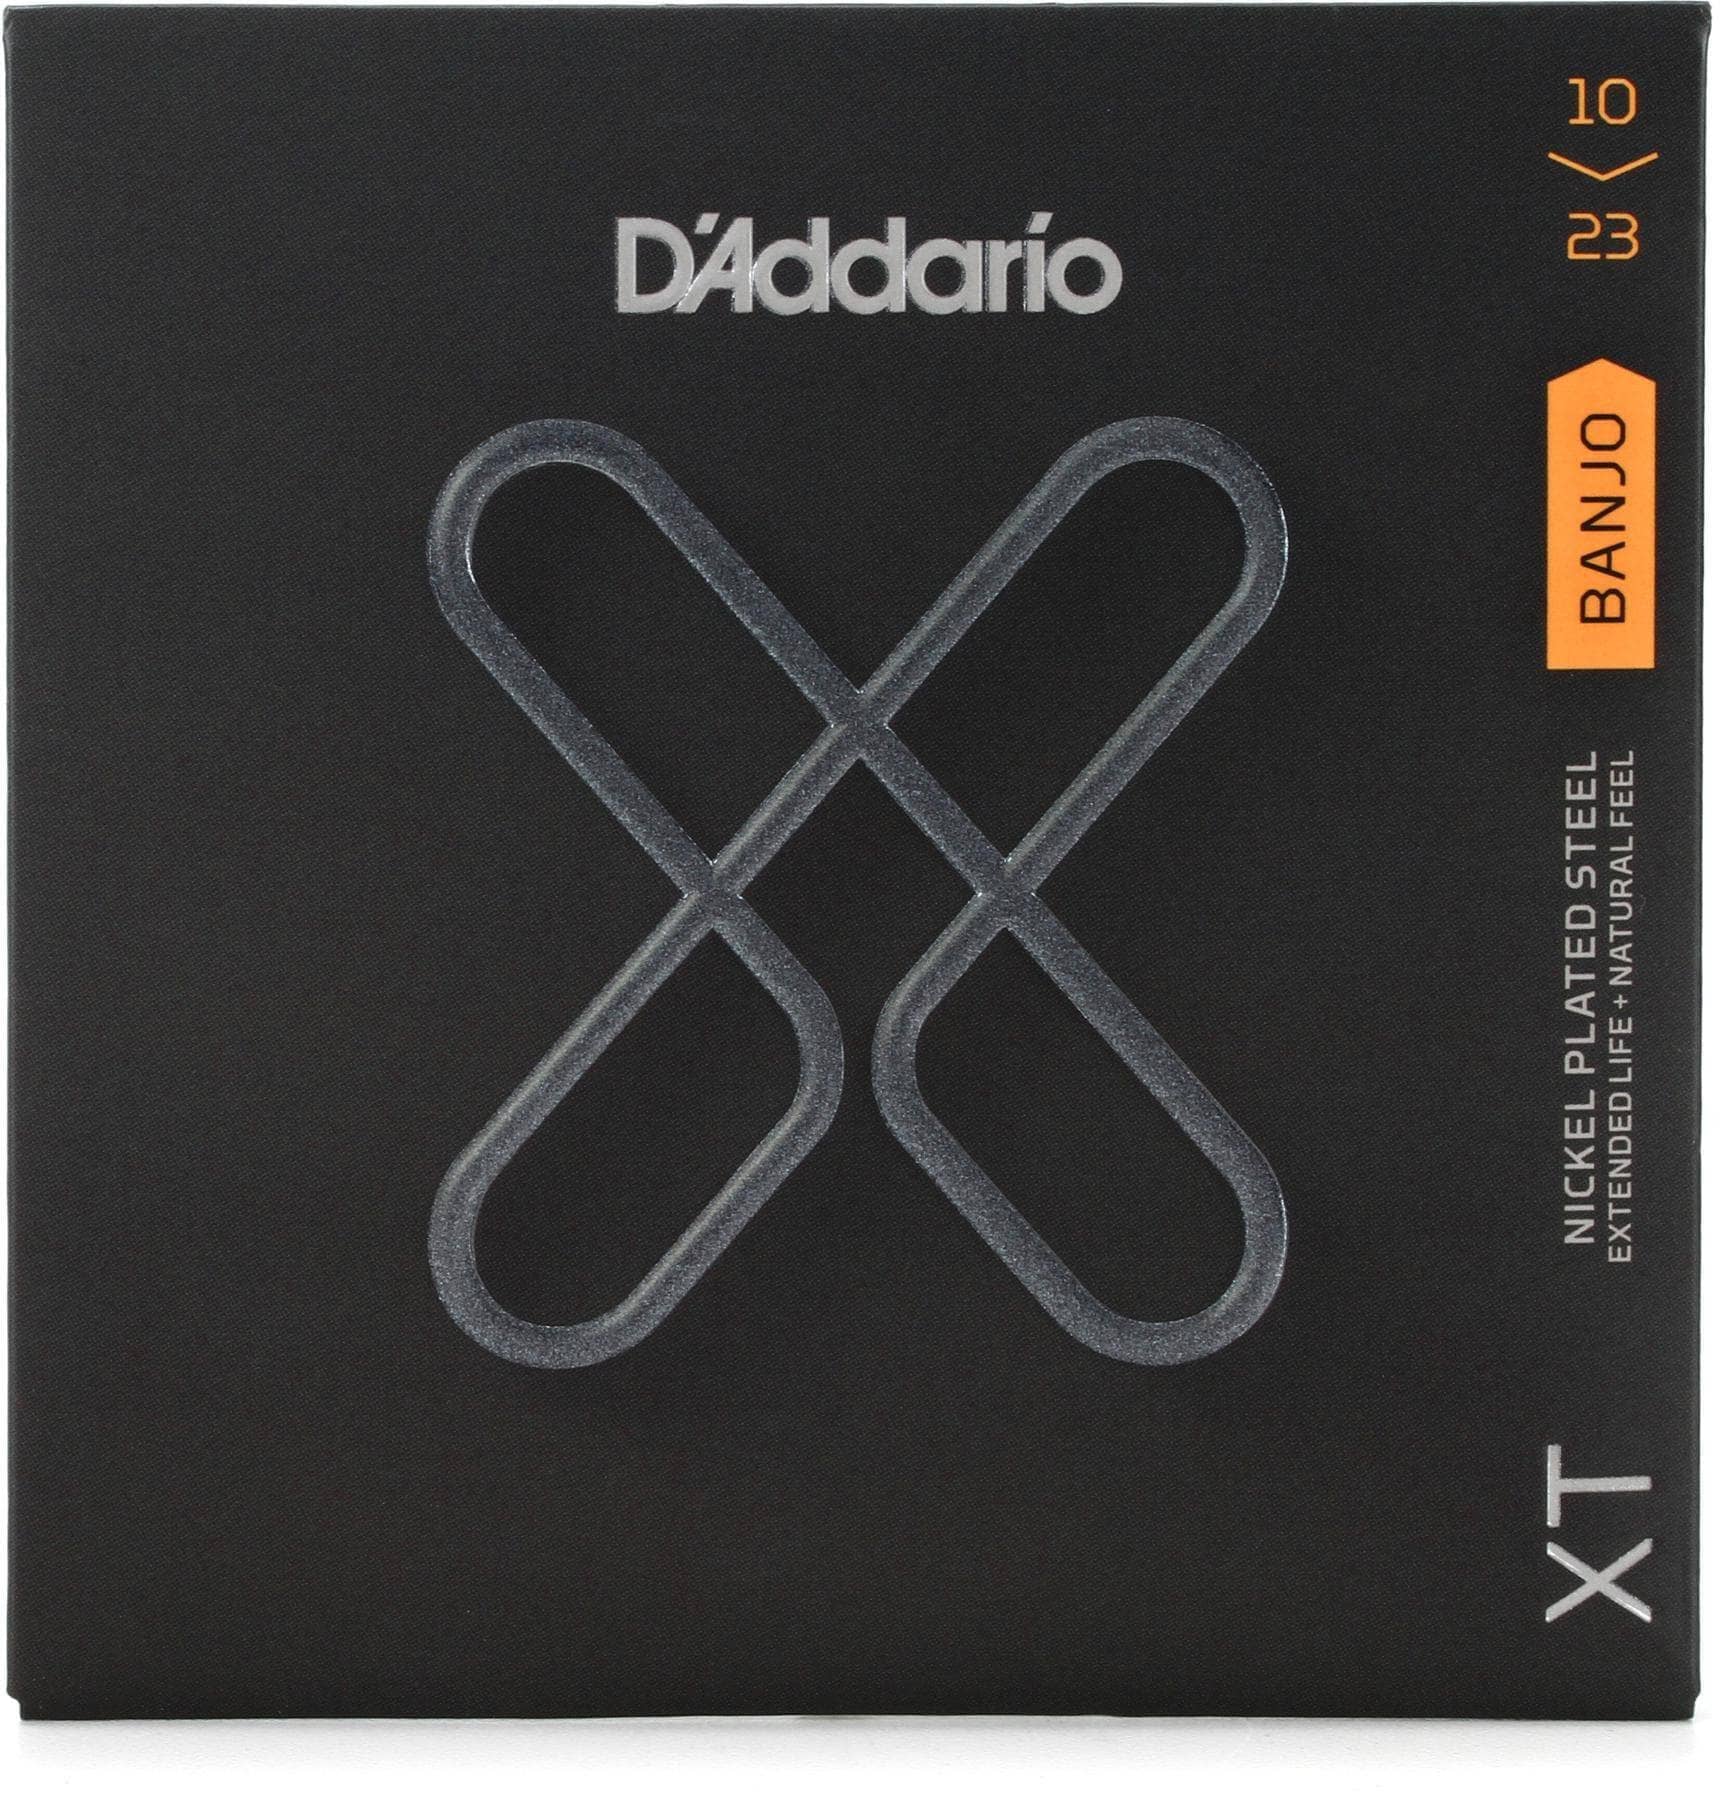 D'Addario XT Nickel Plated Steel Banjo Strings, Medium, 10-23 (XTJ1023) Banjo Studio